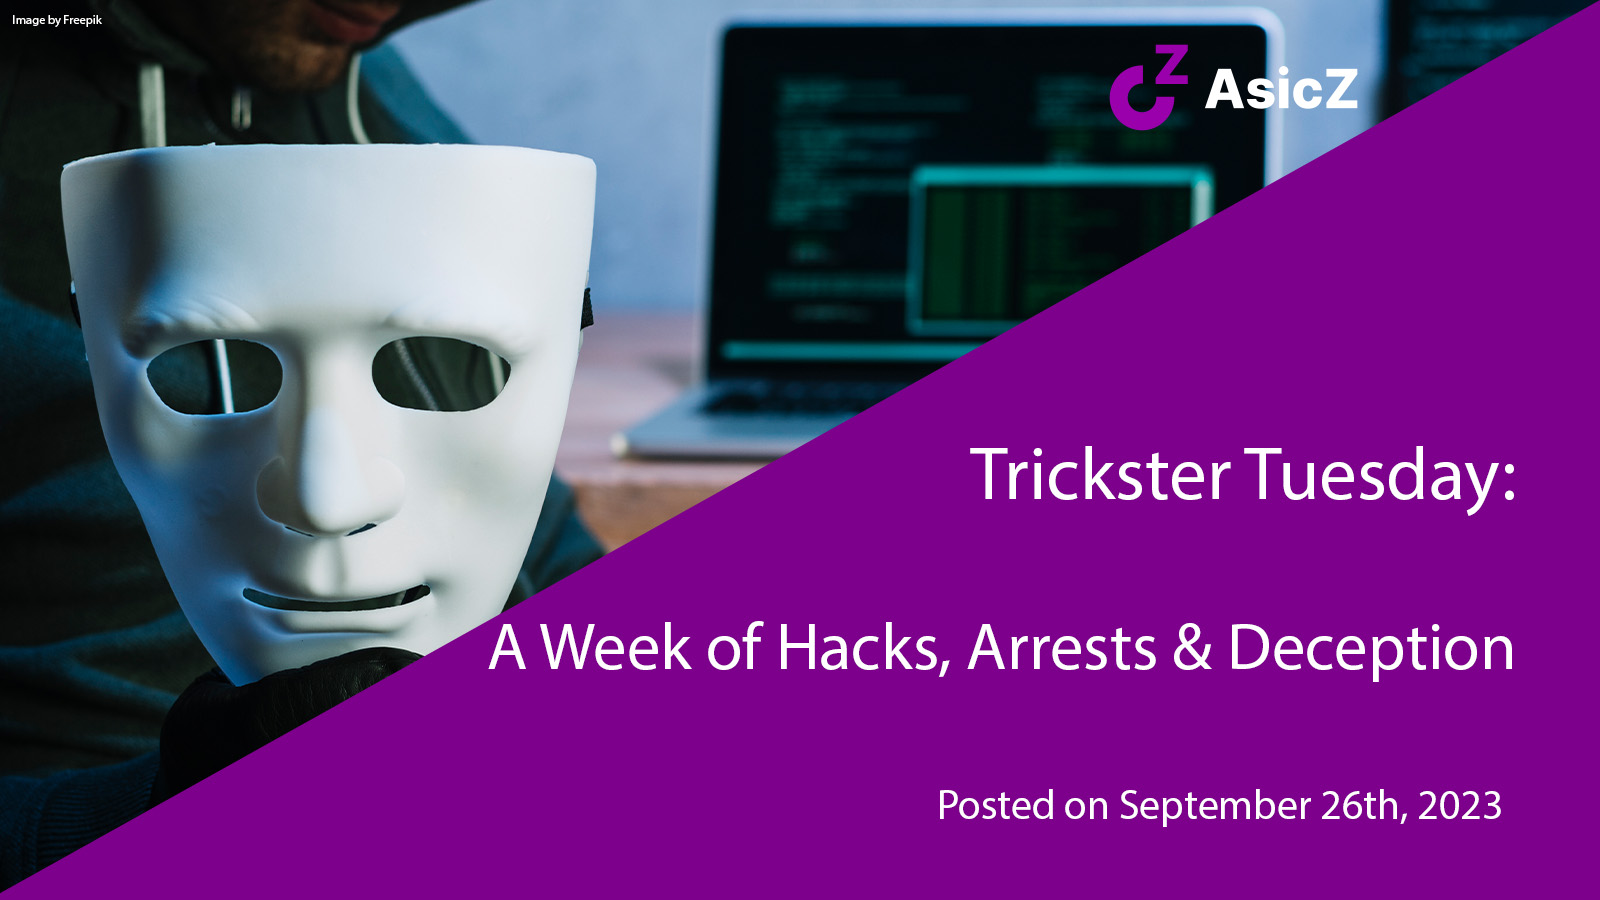 Trickster Tuesday: A Week of Hacks, Arrests & Deception